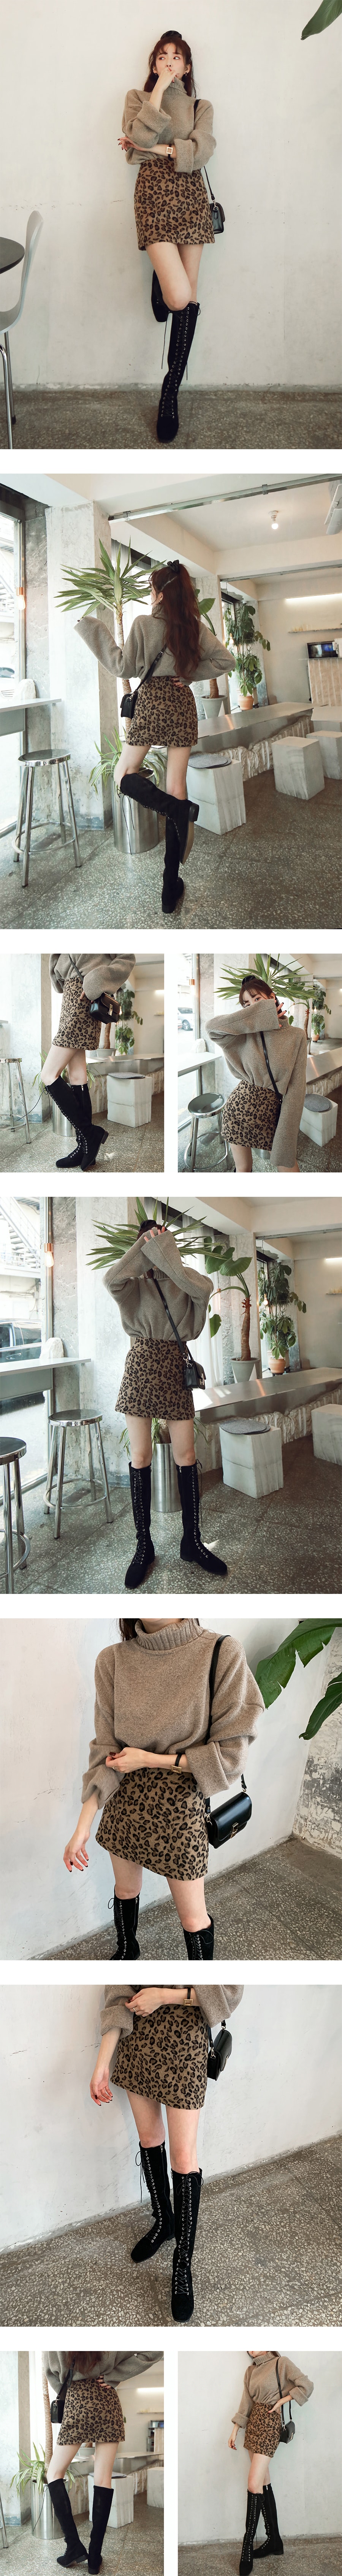 SSUMPART High Rise Leopard Mini Skirt #Brown M(27-28)